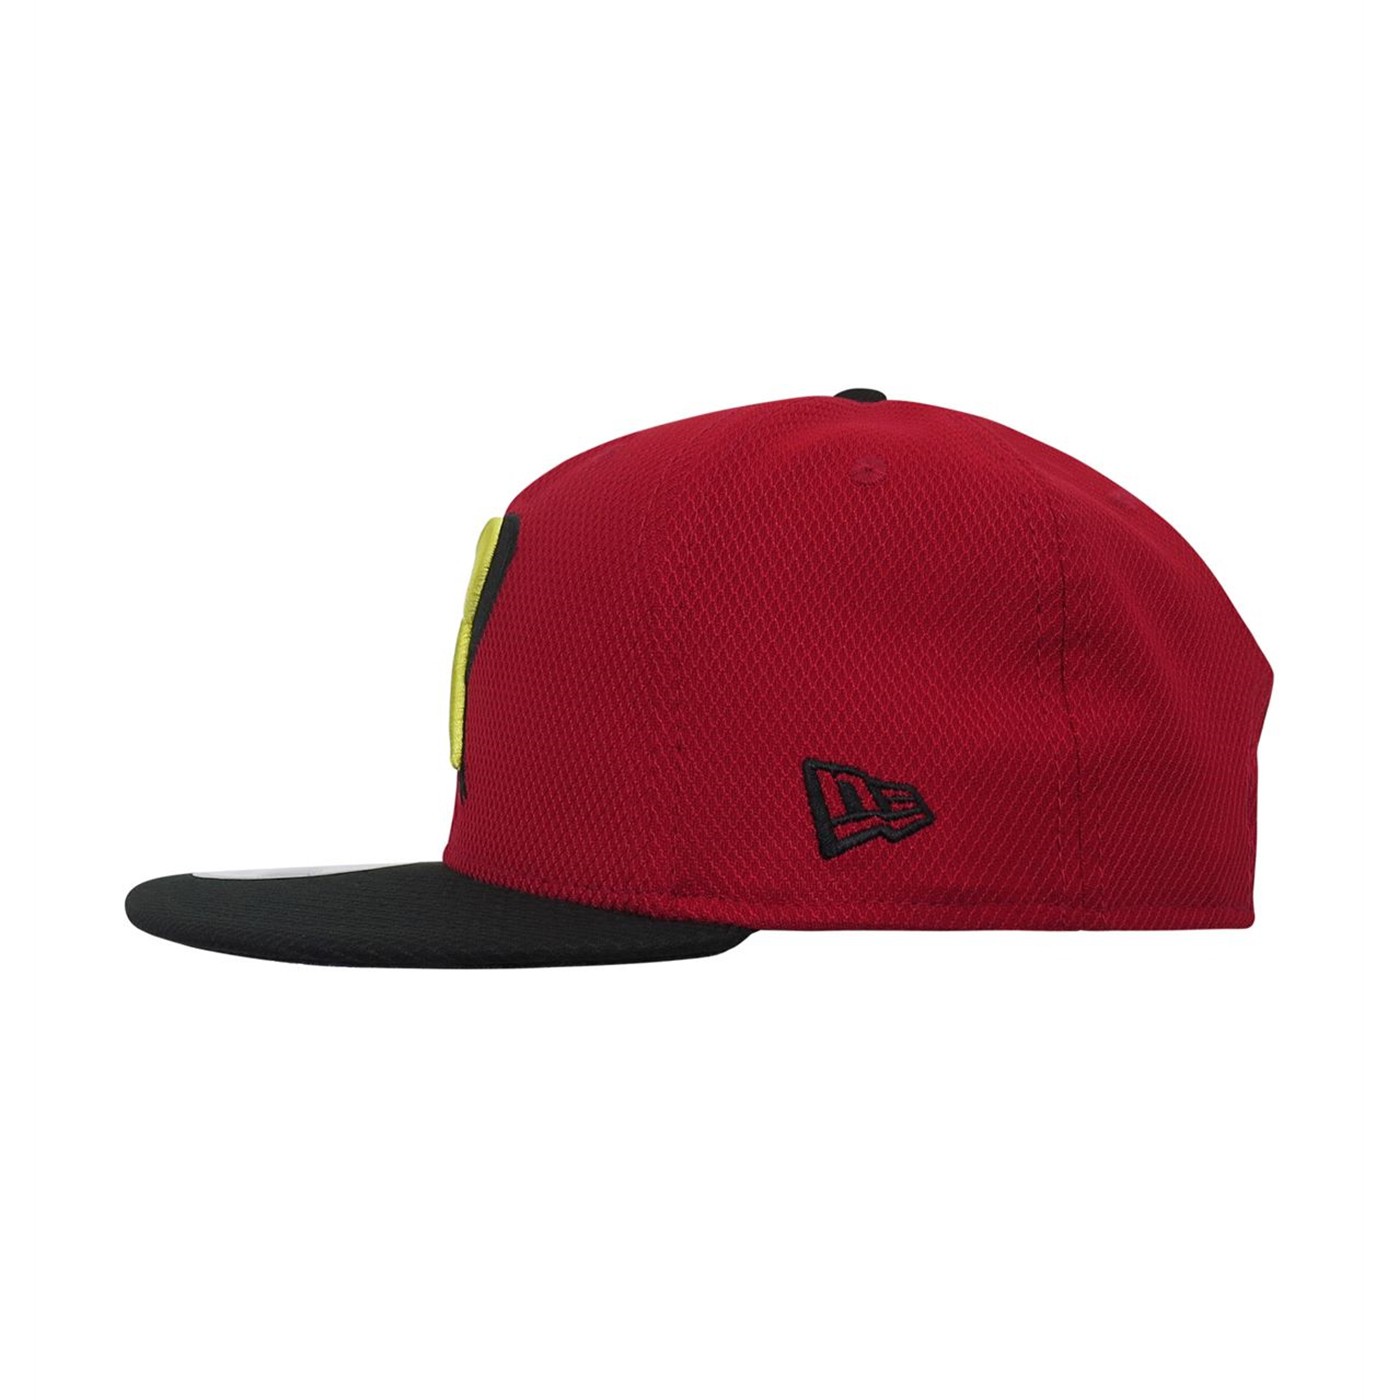 Robin Symbol Red 9Fifty Adjustable Hat